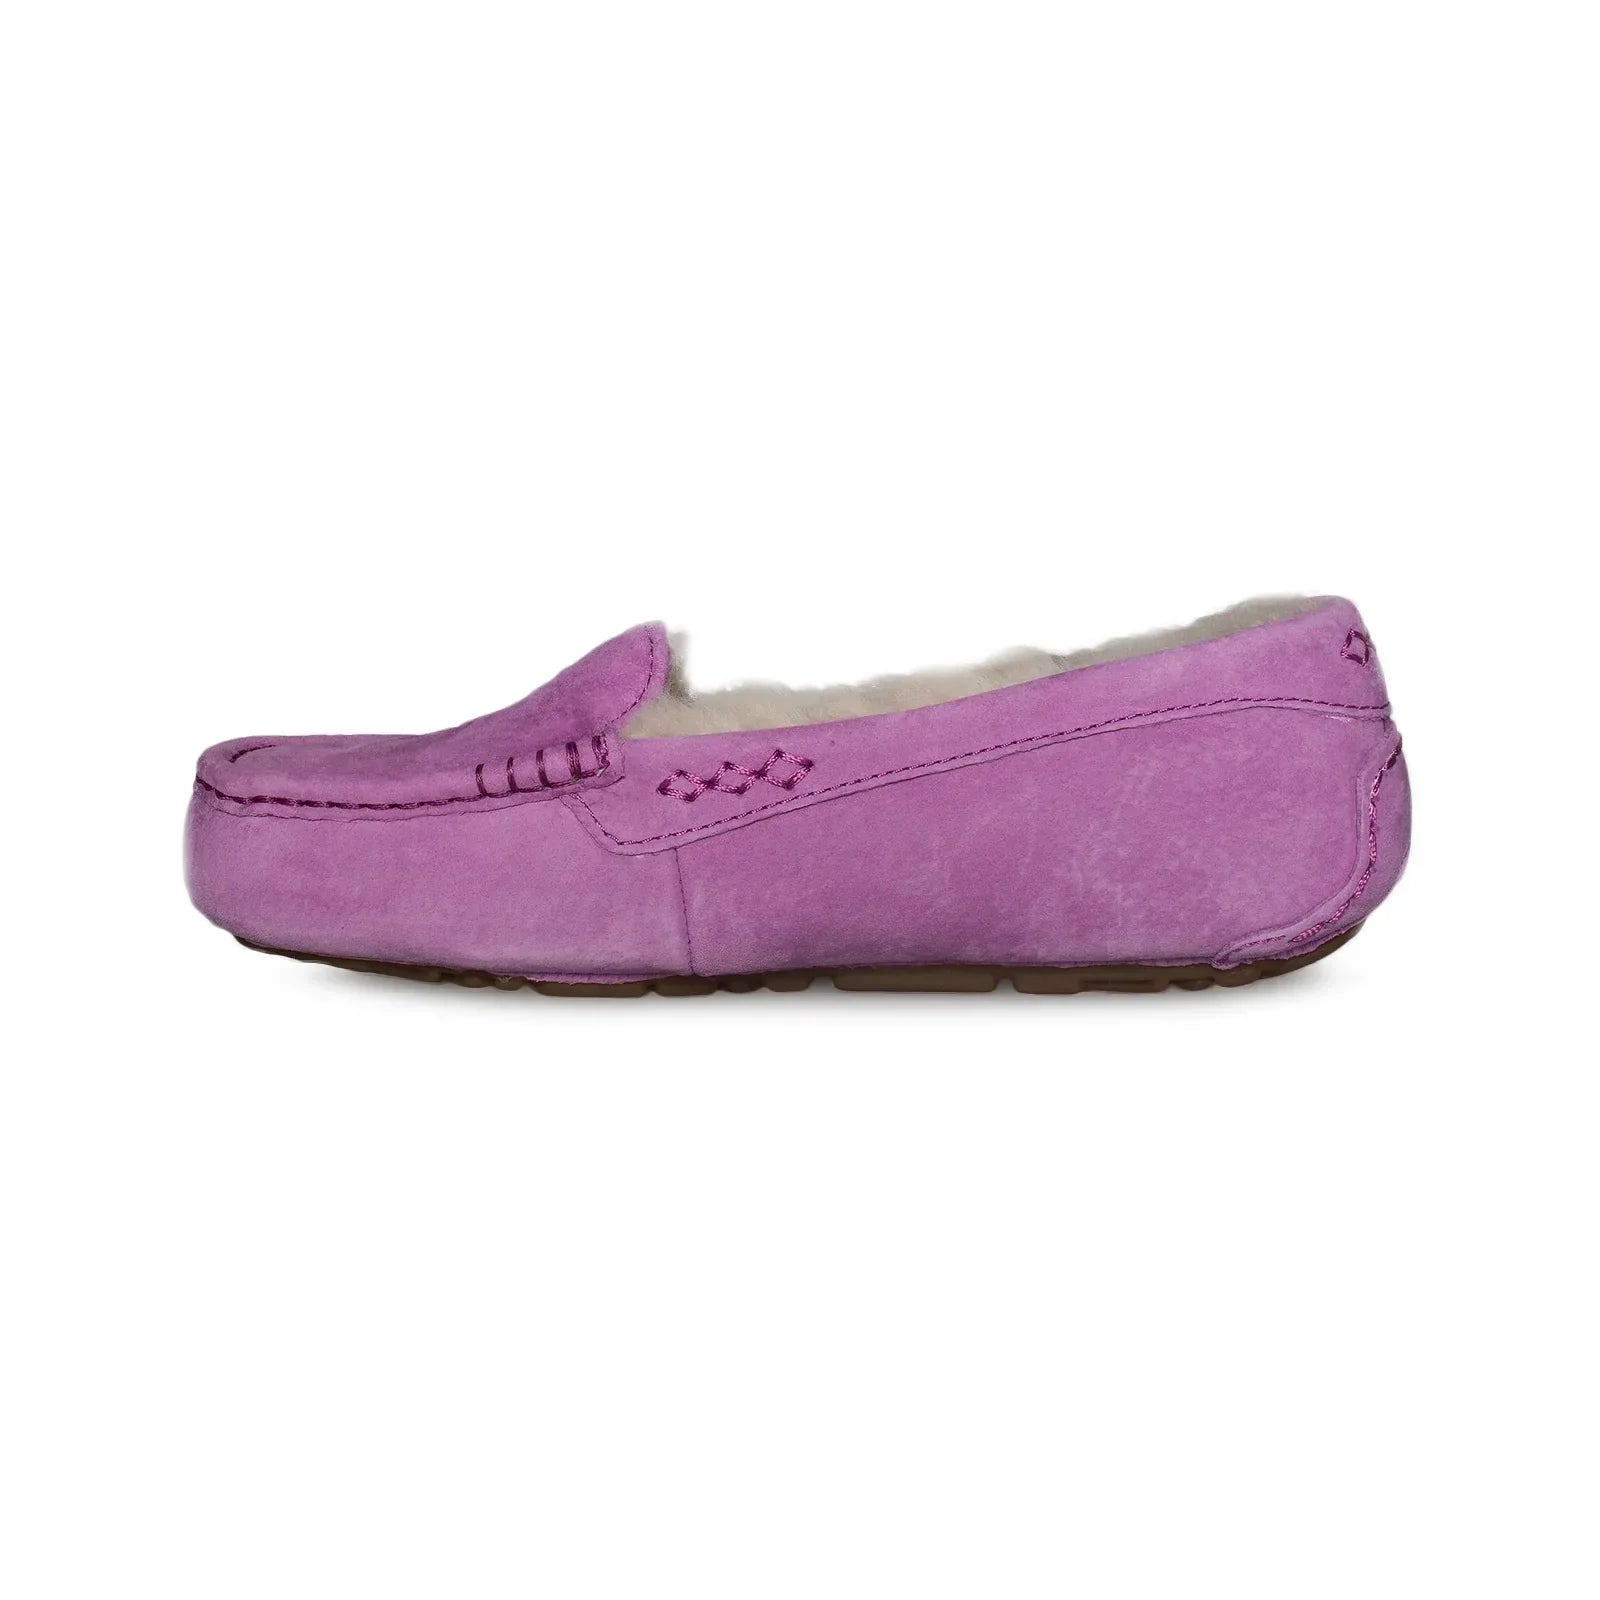 UGG Ansley Bodacious Slippers - Women's